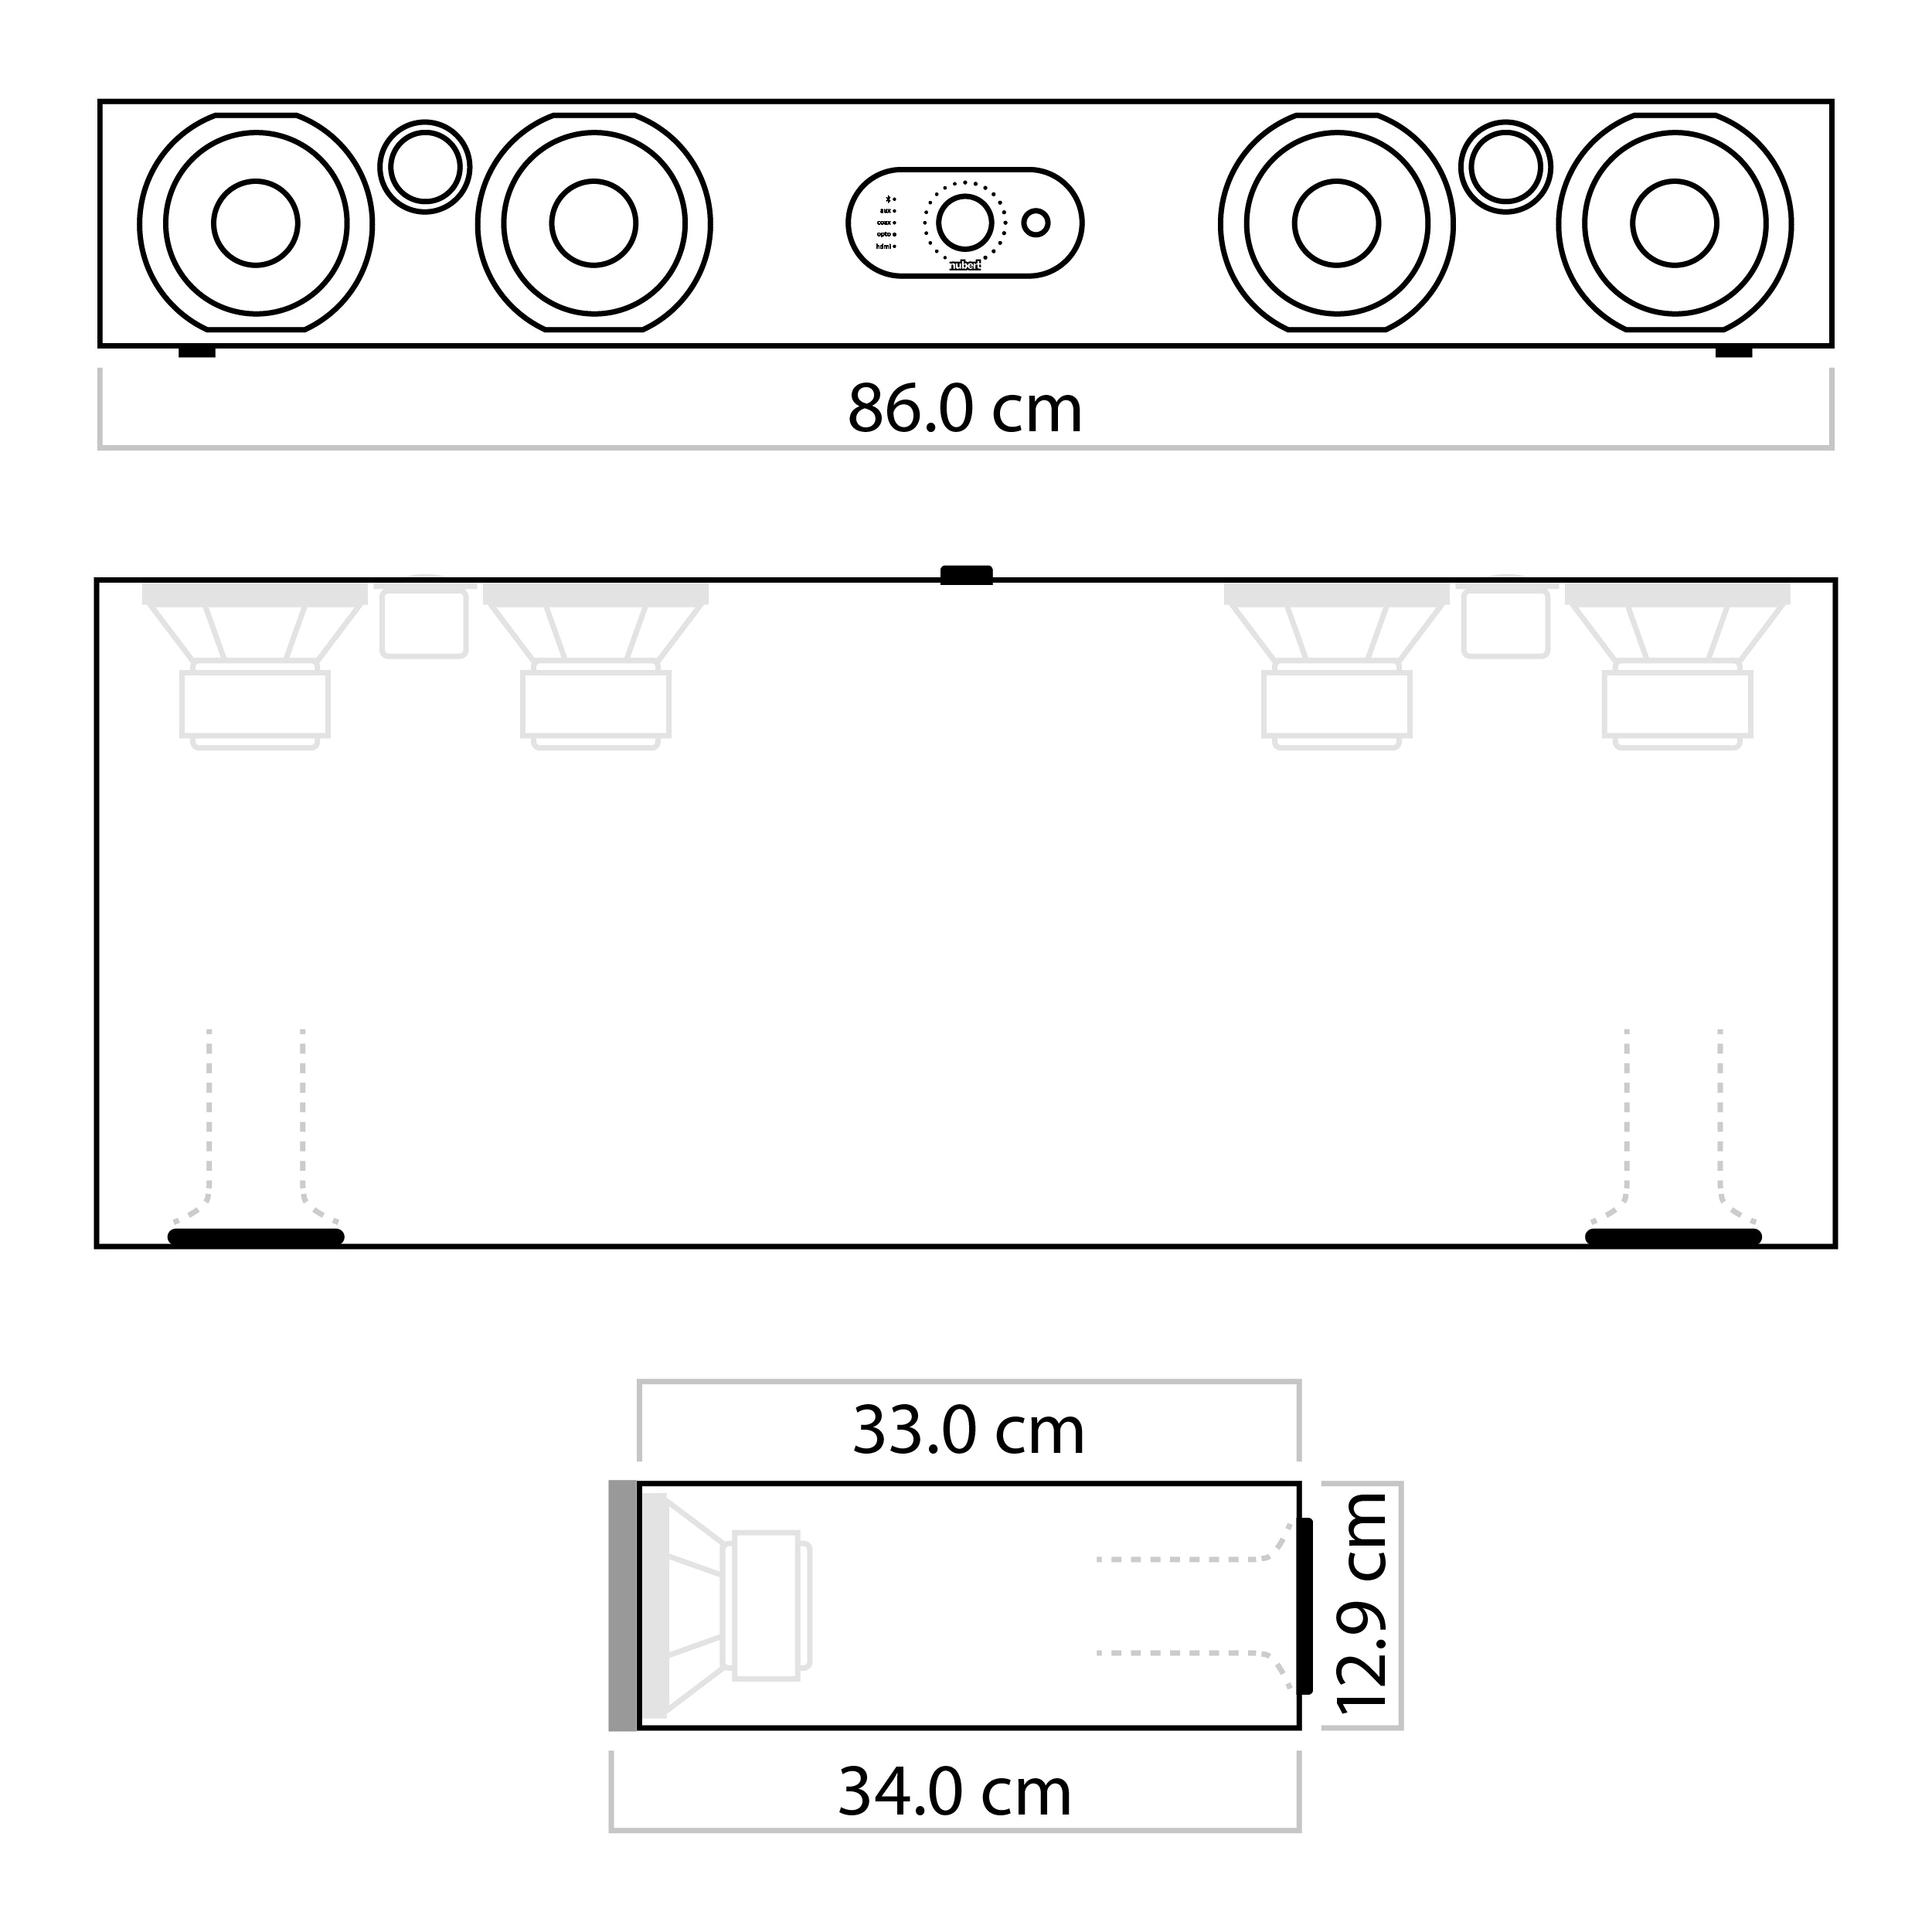 NUBERT nuBoxx AS-425 max Soundplate, Weiß | aktiv Soundbar